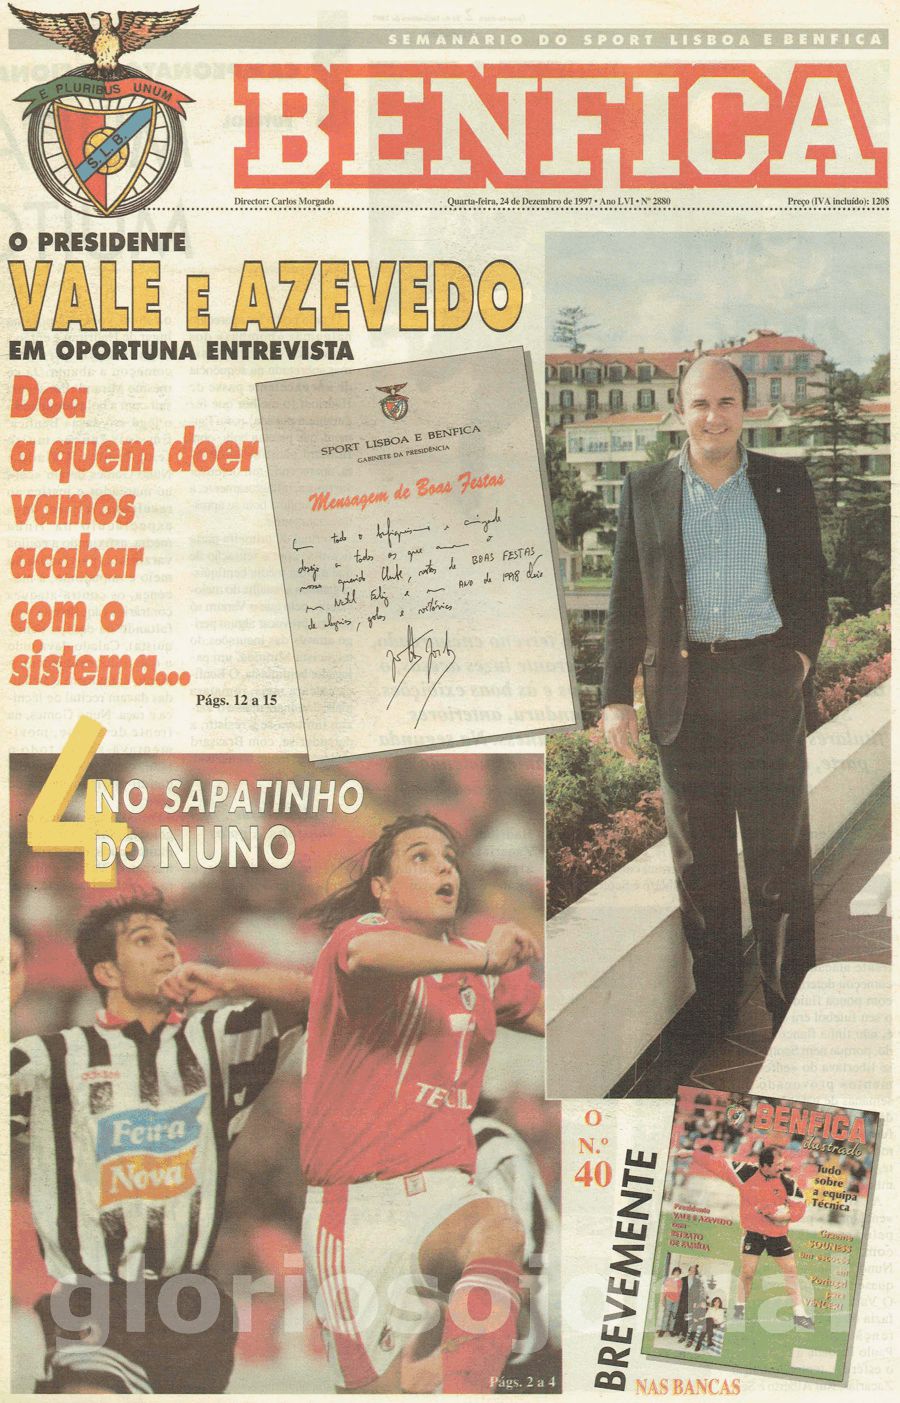 jornal o benfica 2880 1997-12-24